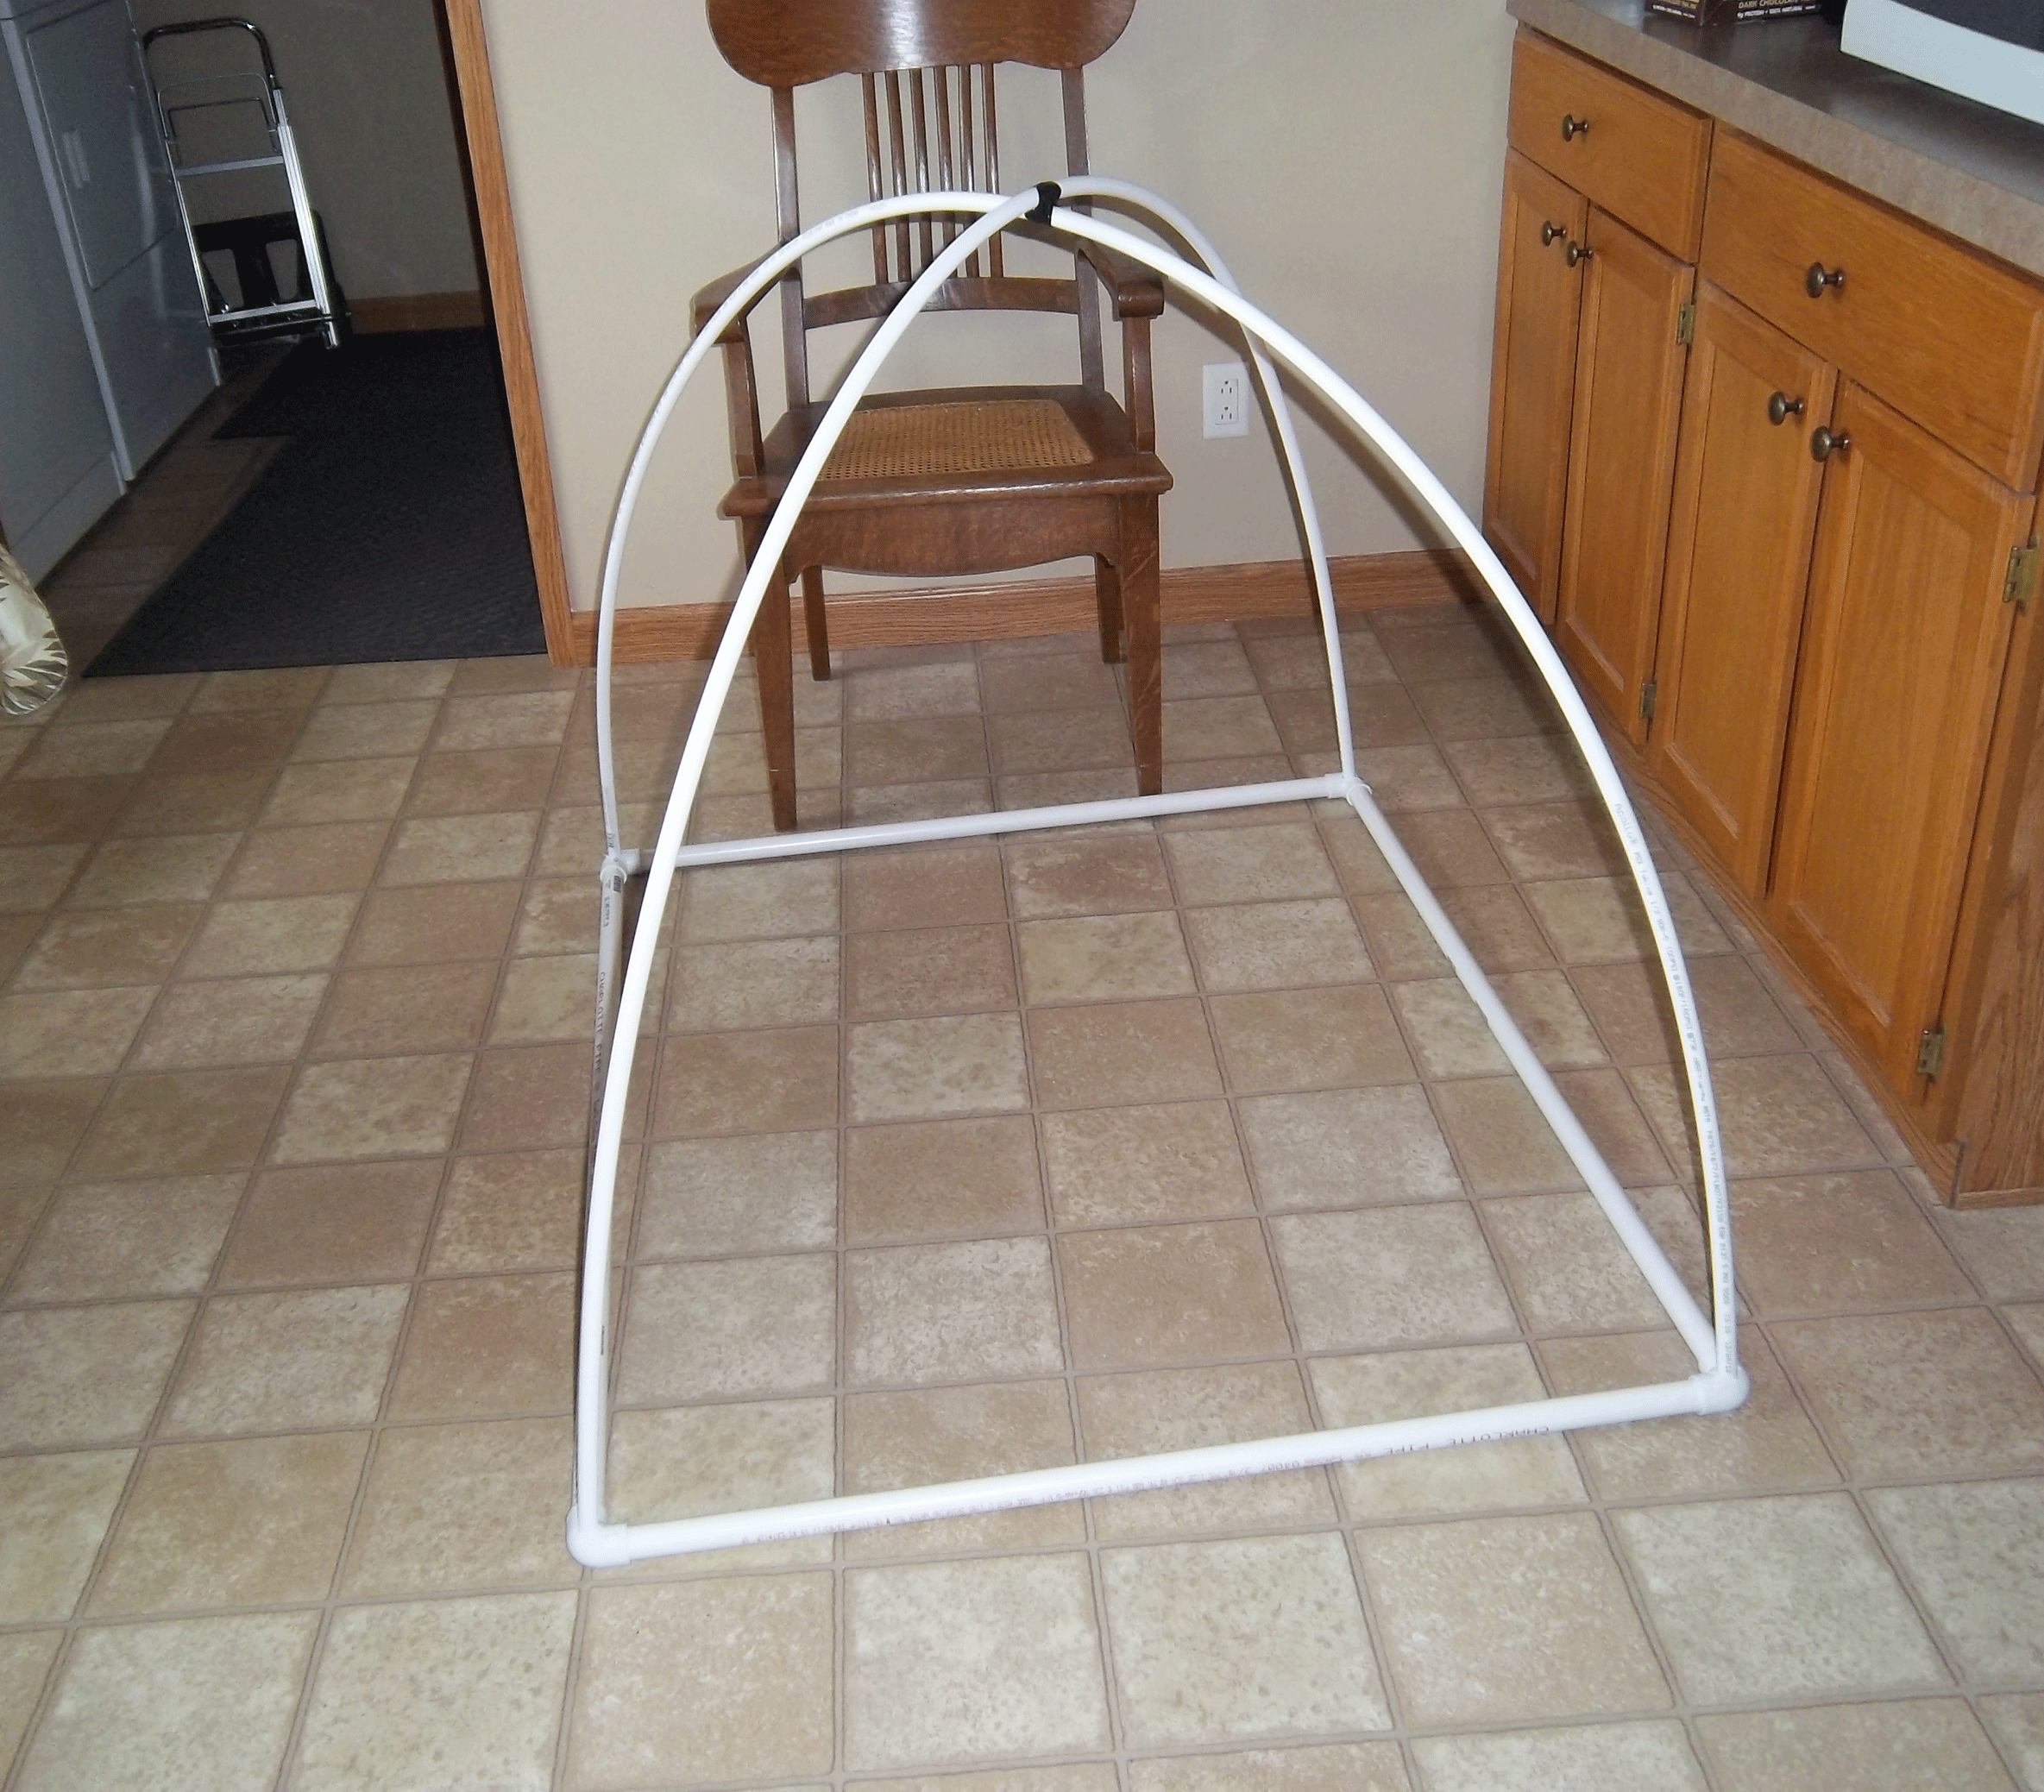 PVC Pipe Tent Frame